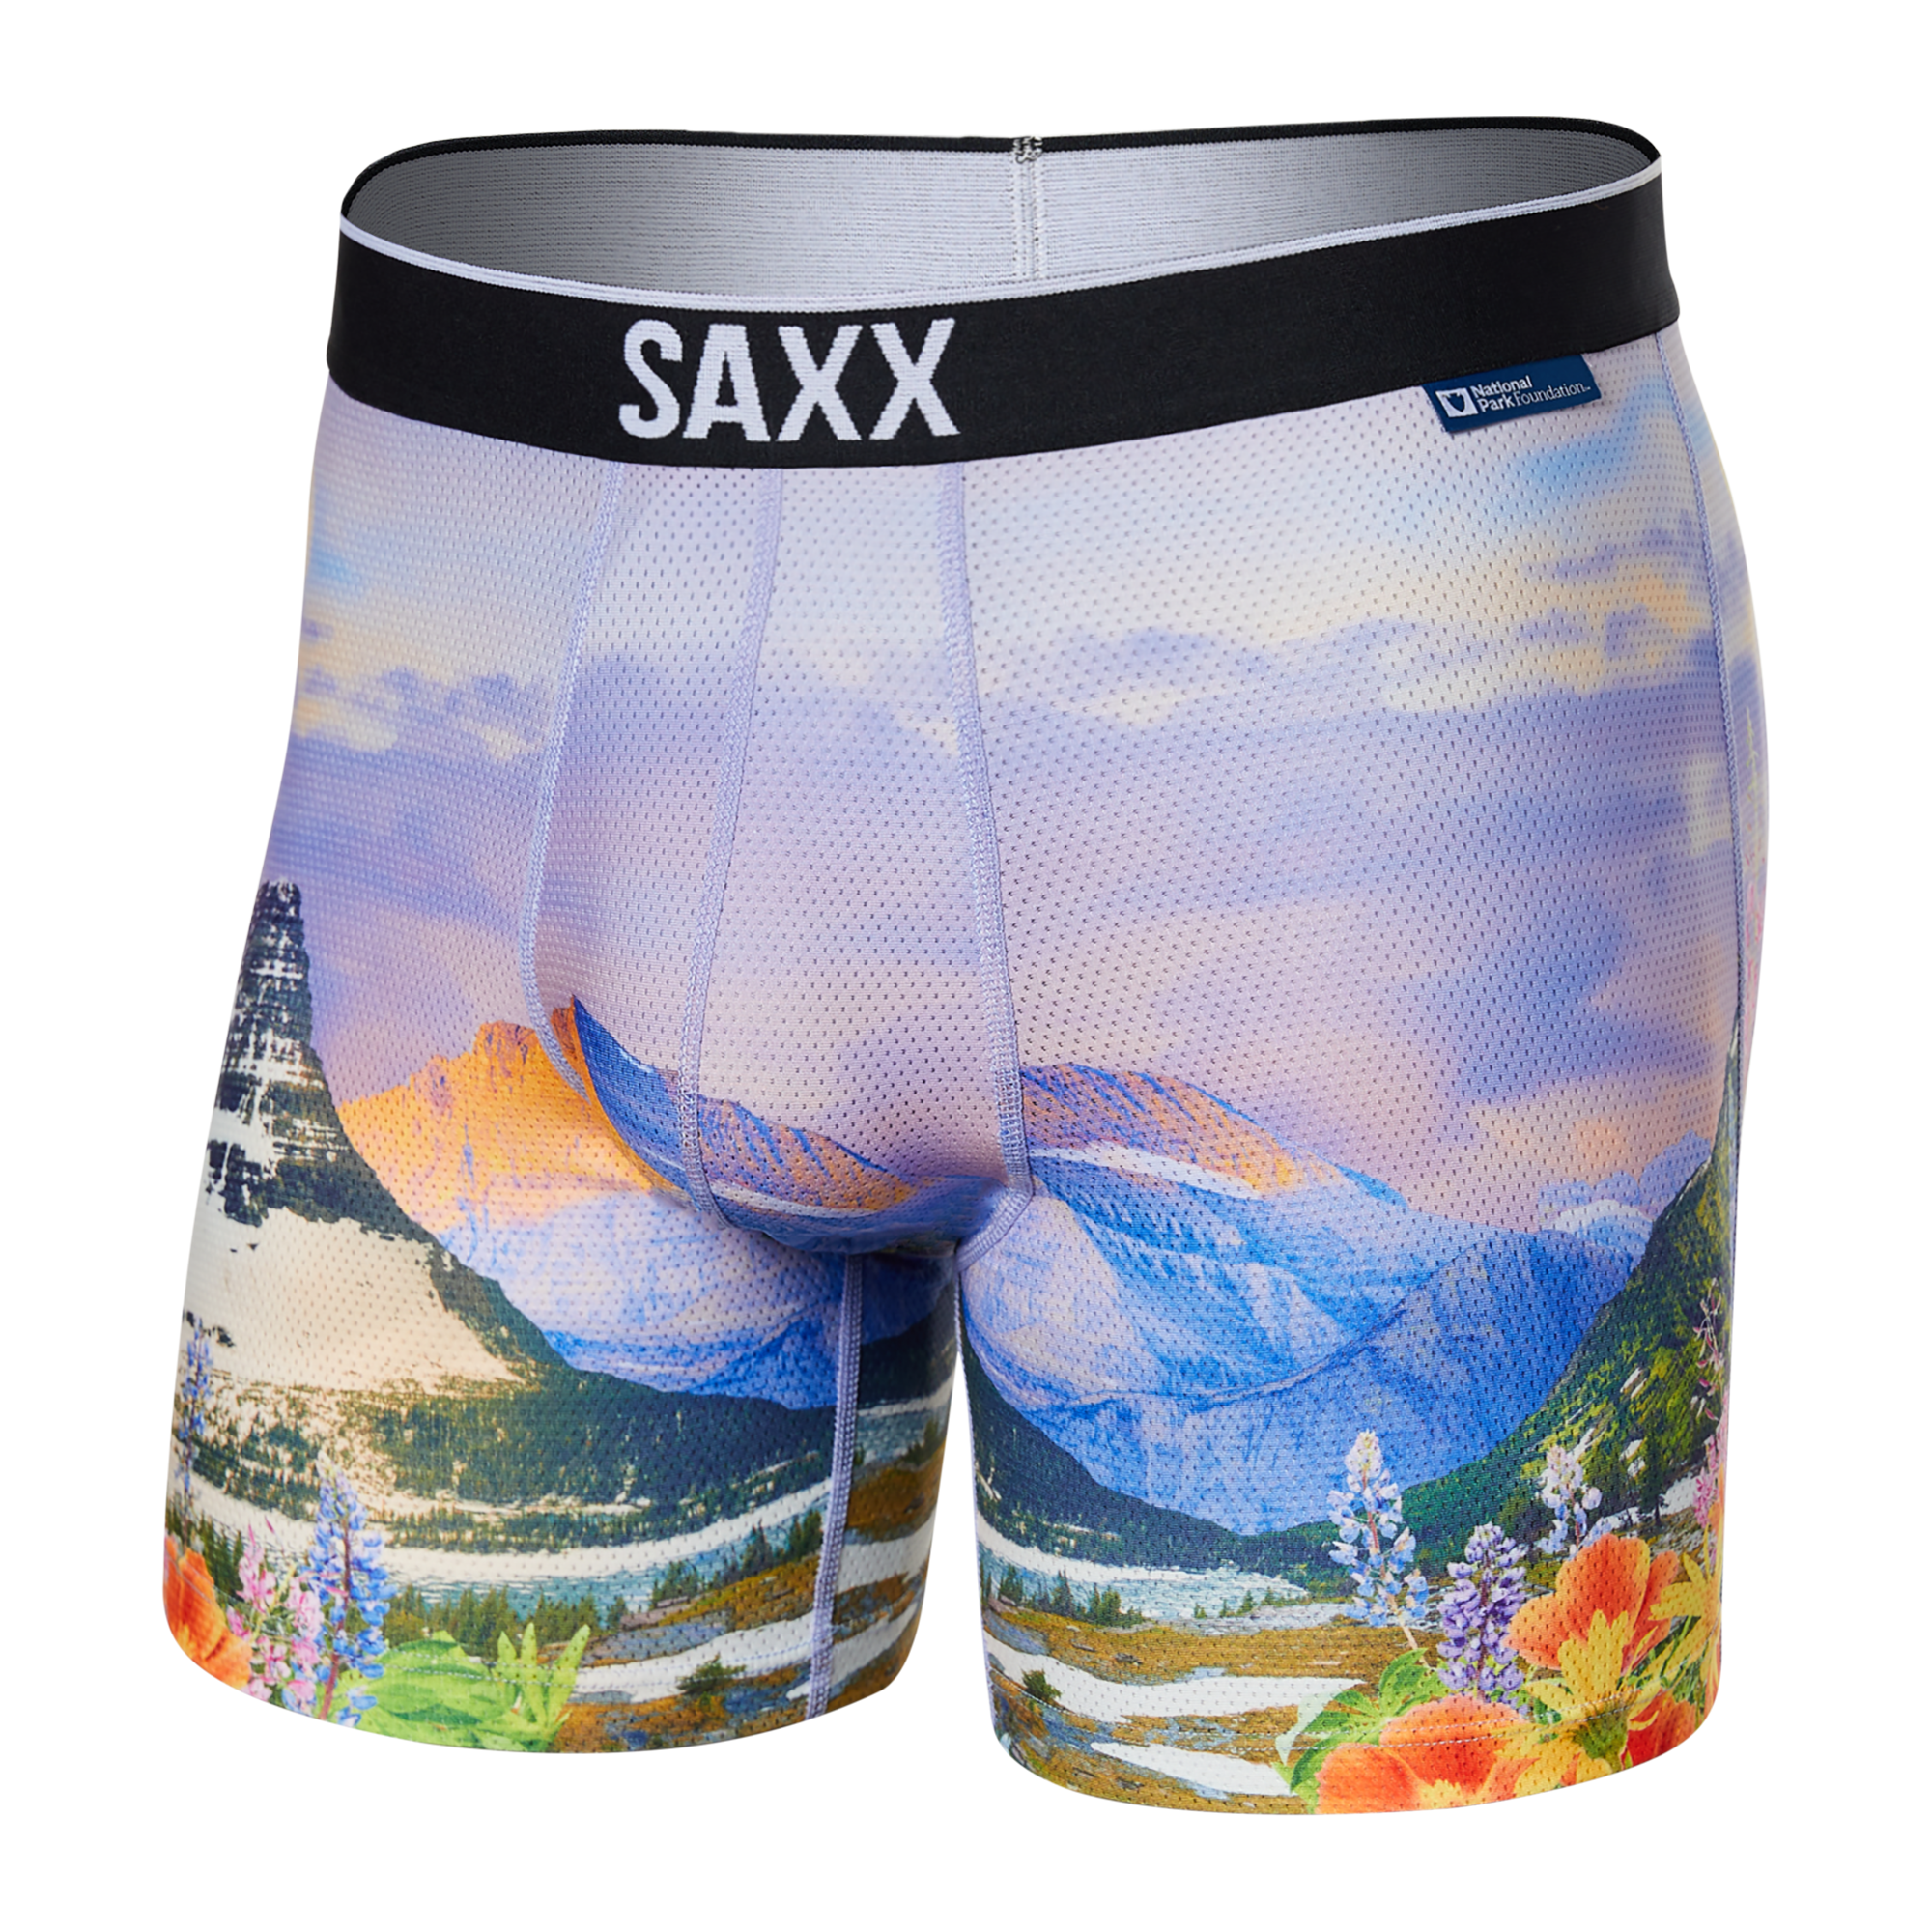 Volt Breath Mesh Boxershorts | Saxx